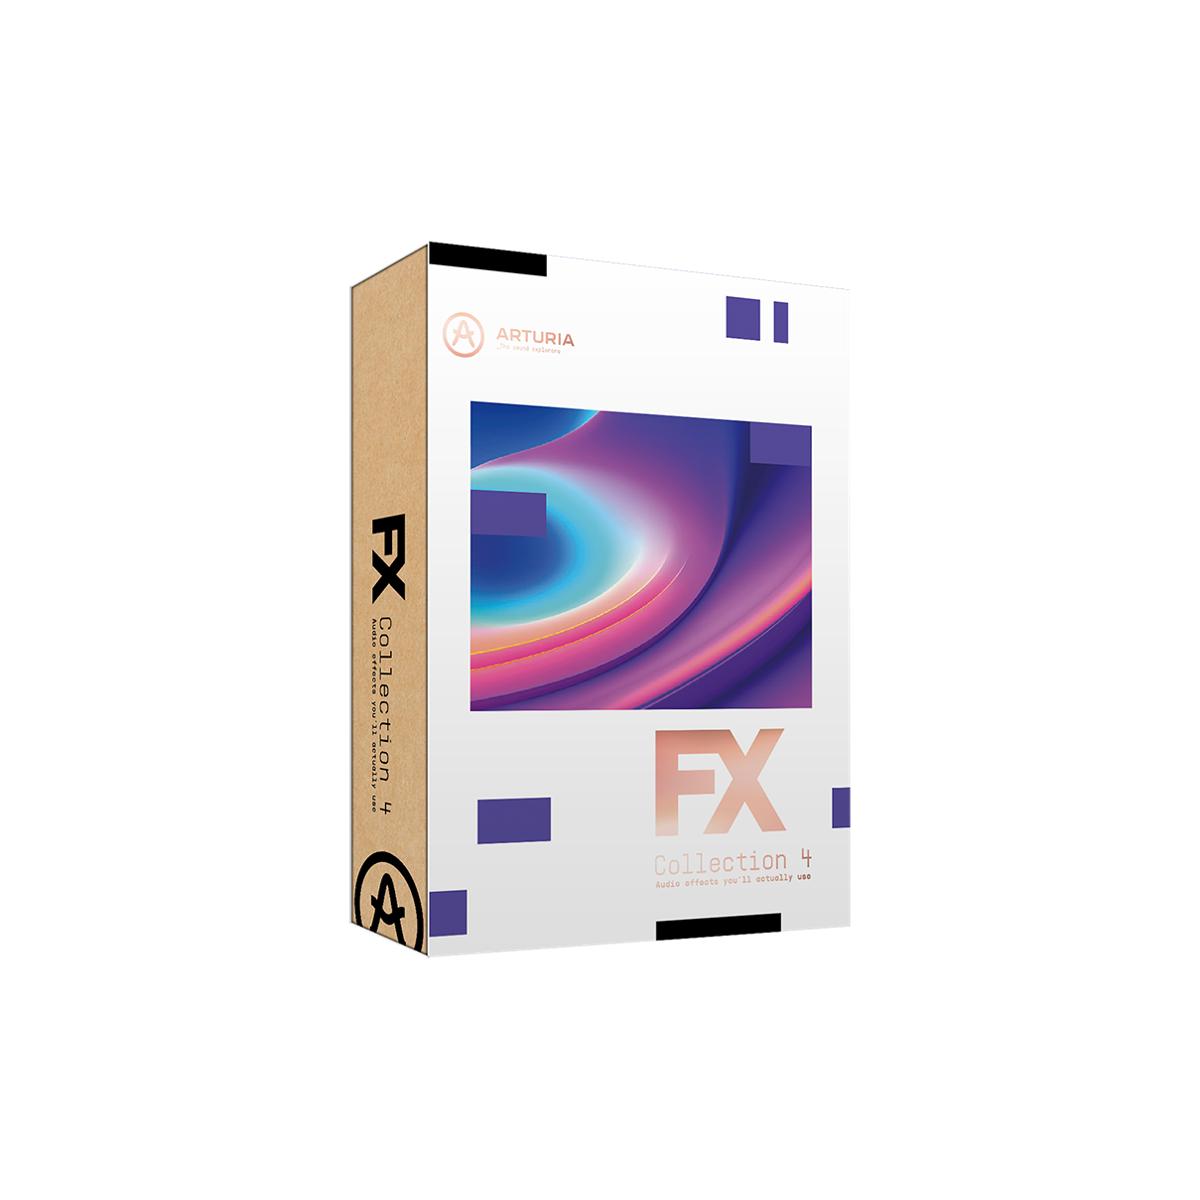 Arturia FX Collection 4 Software - (BOXED COPY)